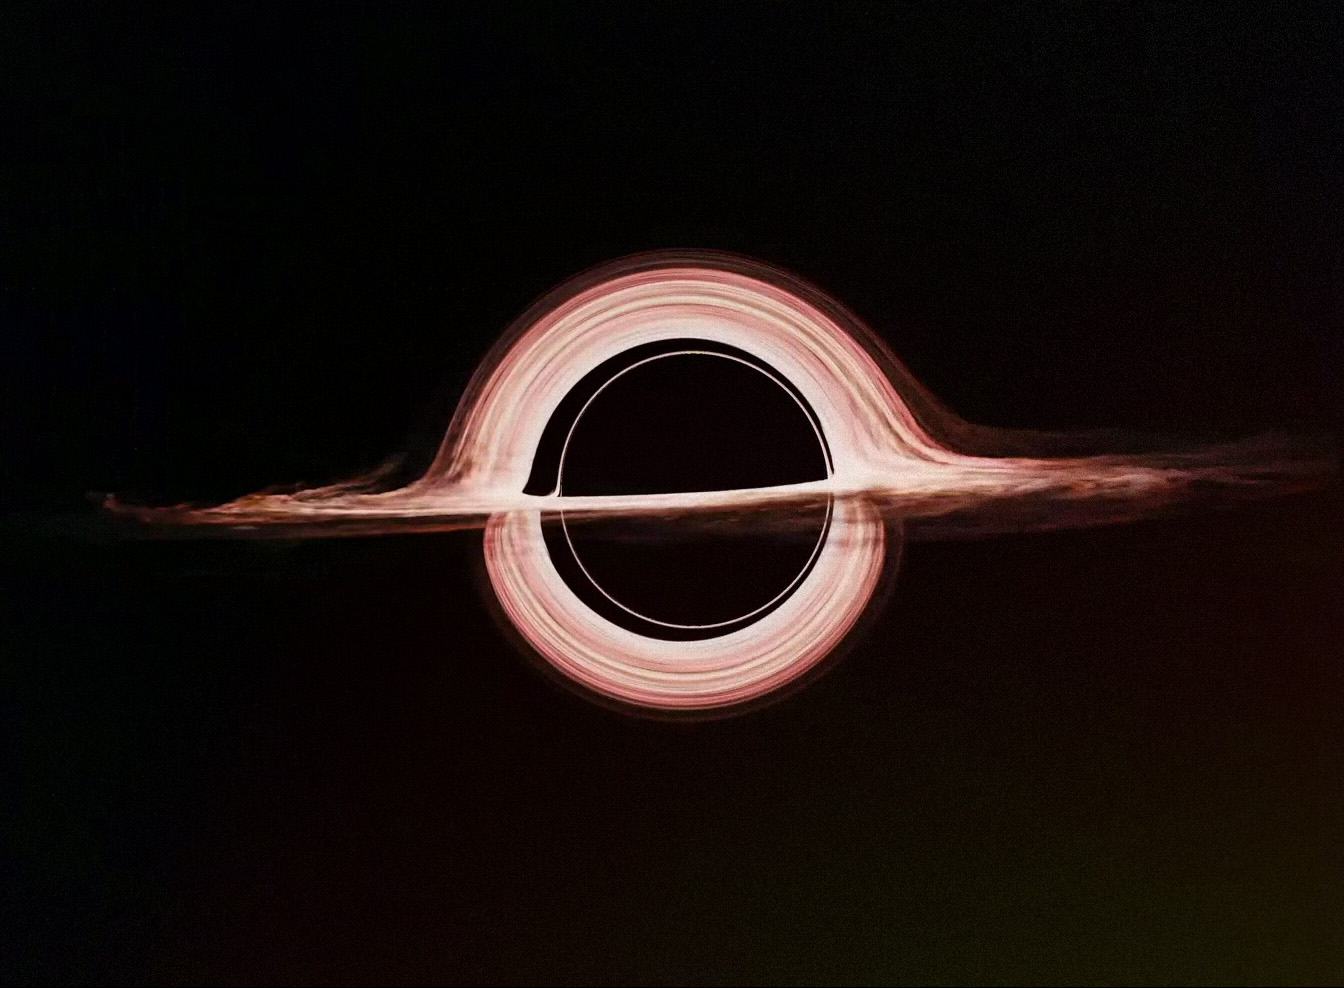 Interstellar - image courtesy of Paramount